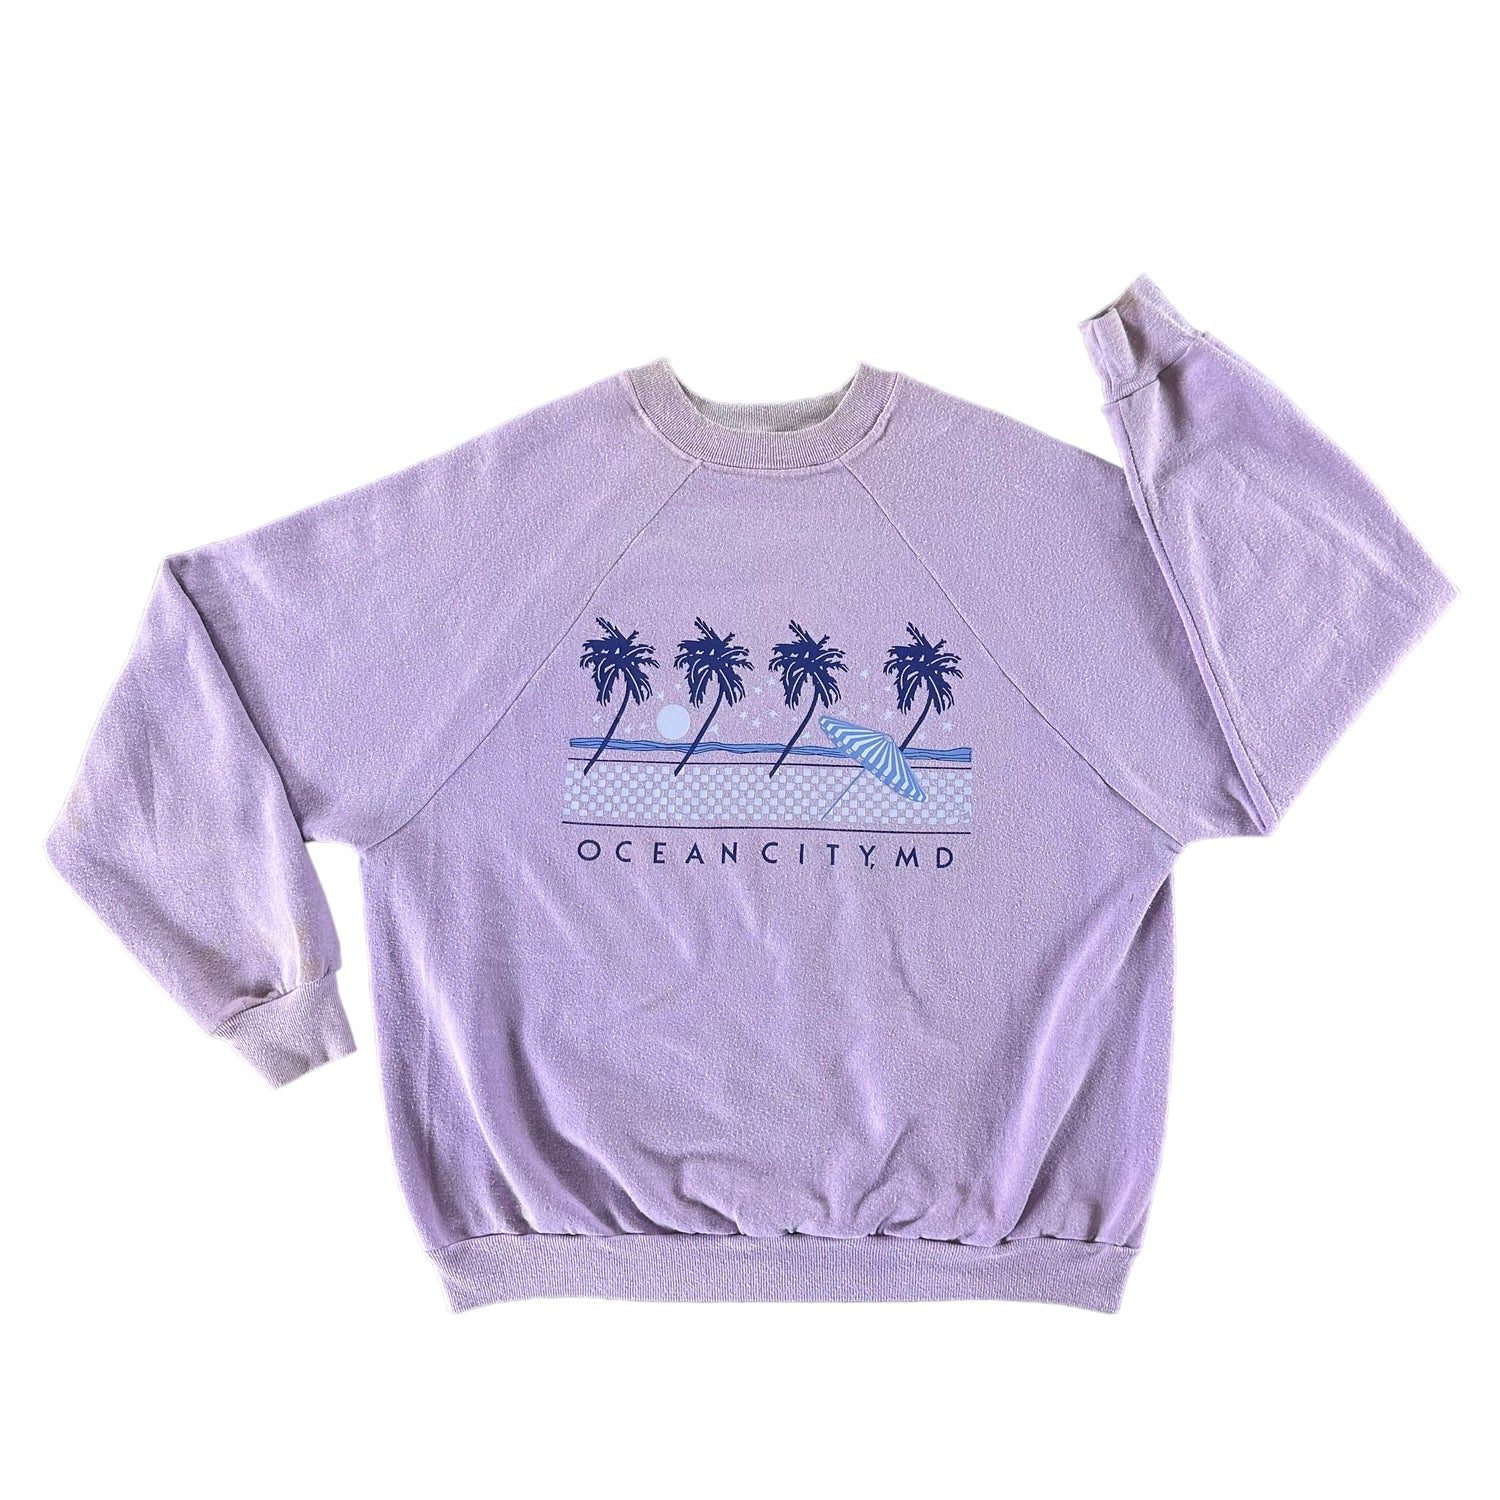 Vintage 1980s Ocean City Sweatshirt size XL